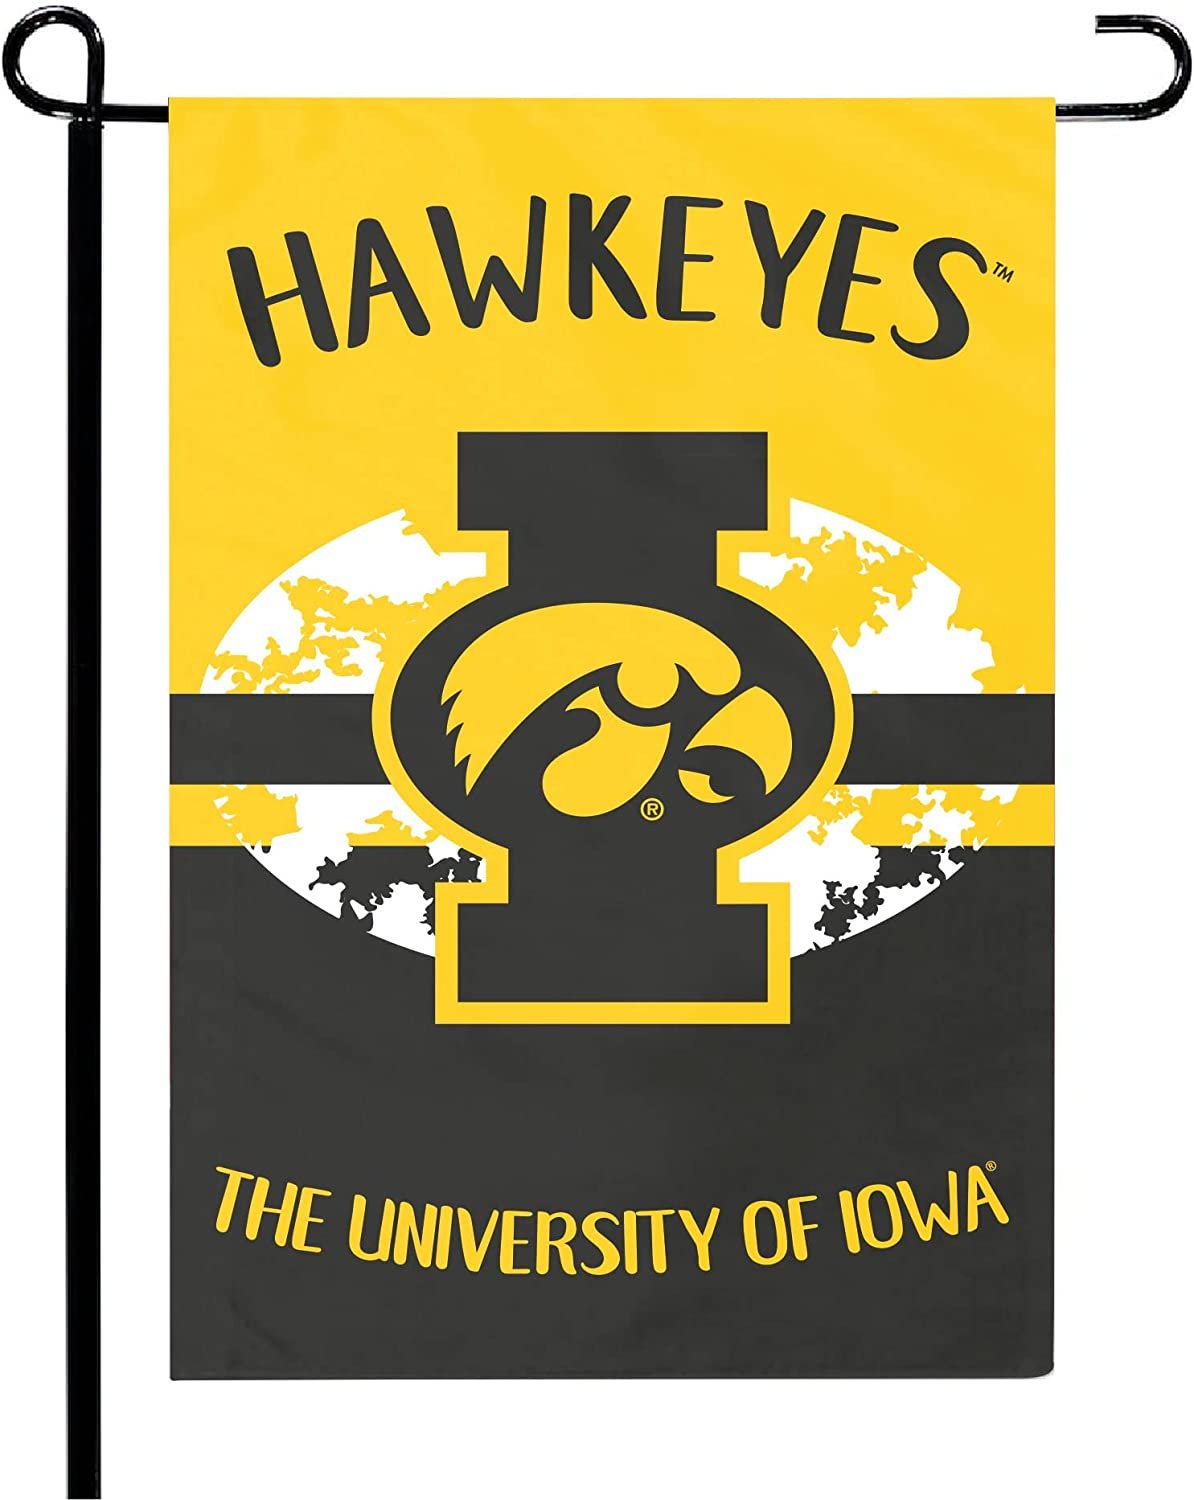 University of Iowa Hawkeyes Double Sided Garden Flag Banner 12x18 Inch Alternate Design